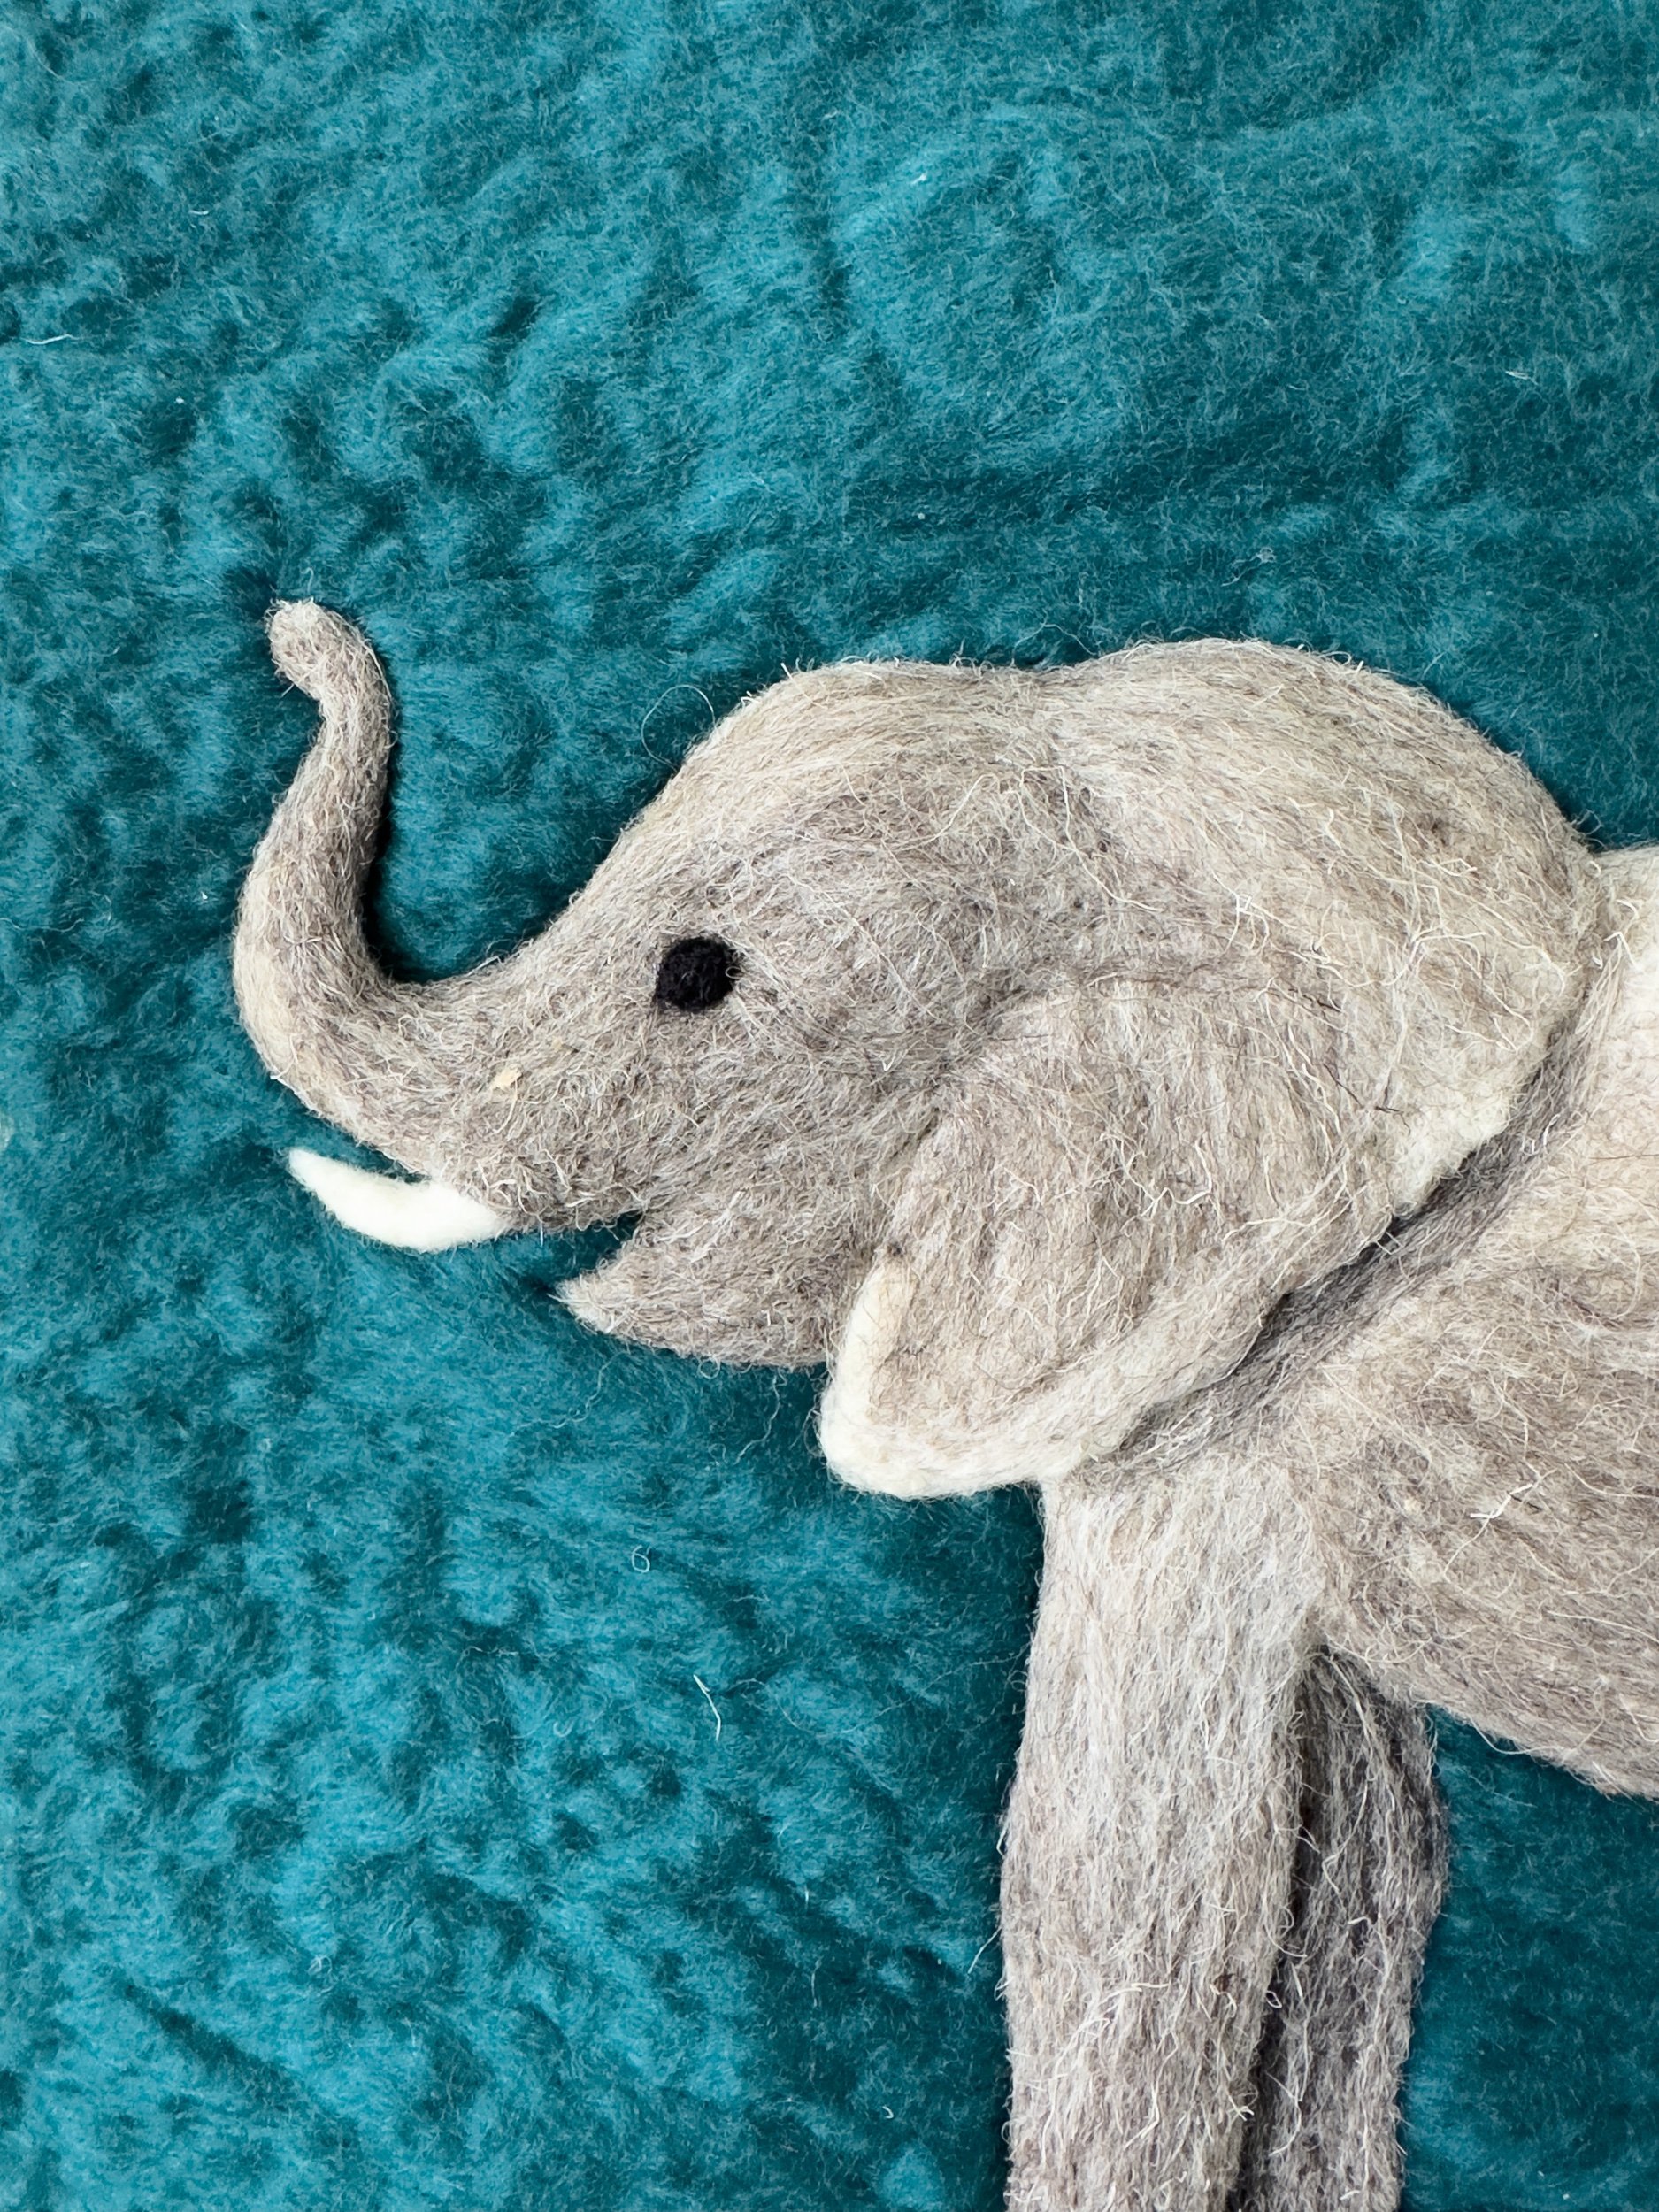 Felt Teal Elephant - Commission, detail